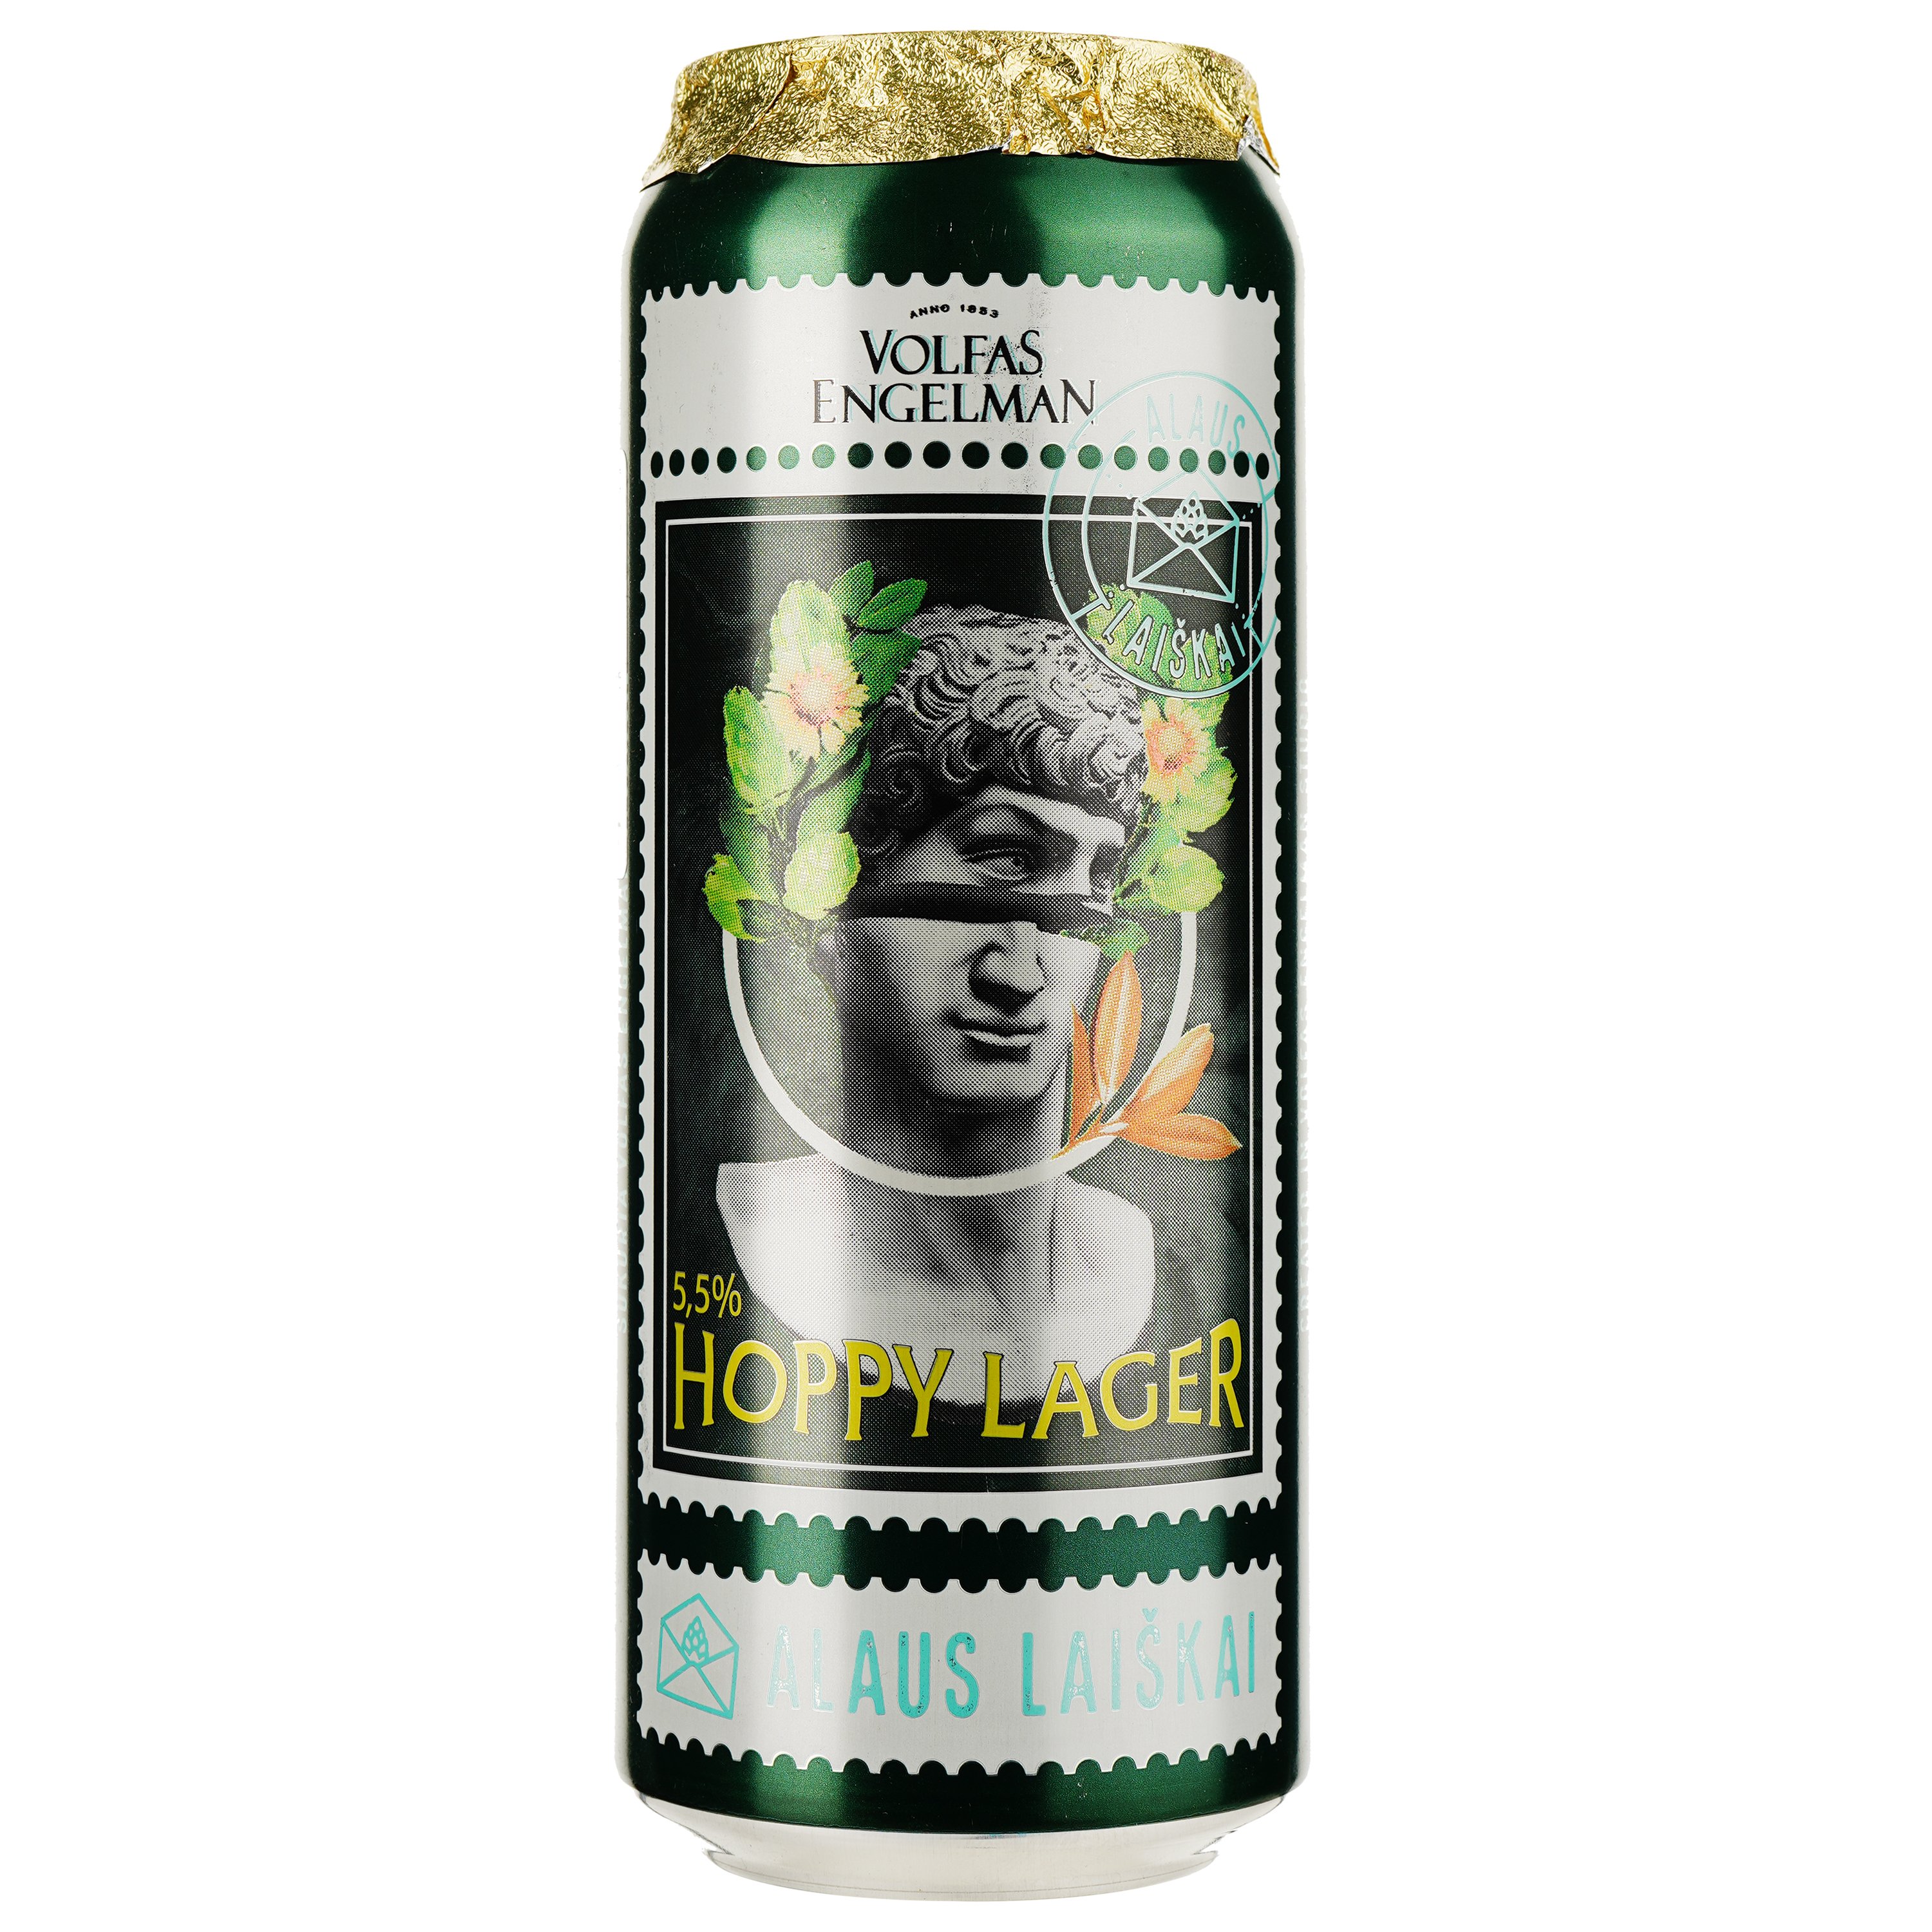 Пиво Volfas Engelman Hoppy lager, світле, з/б, 5,5%, 0,5 л - фото 1